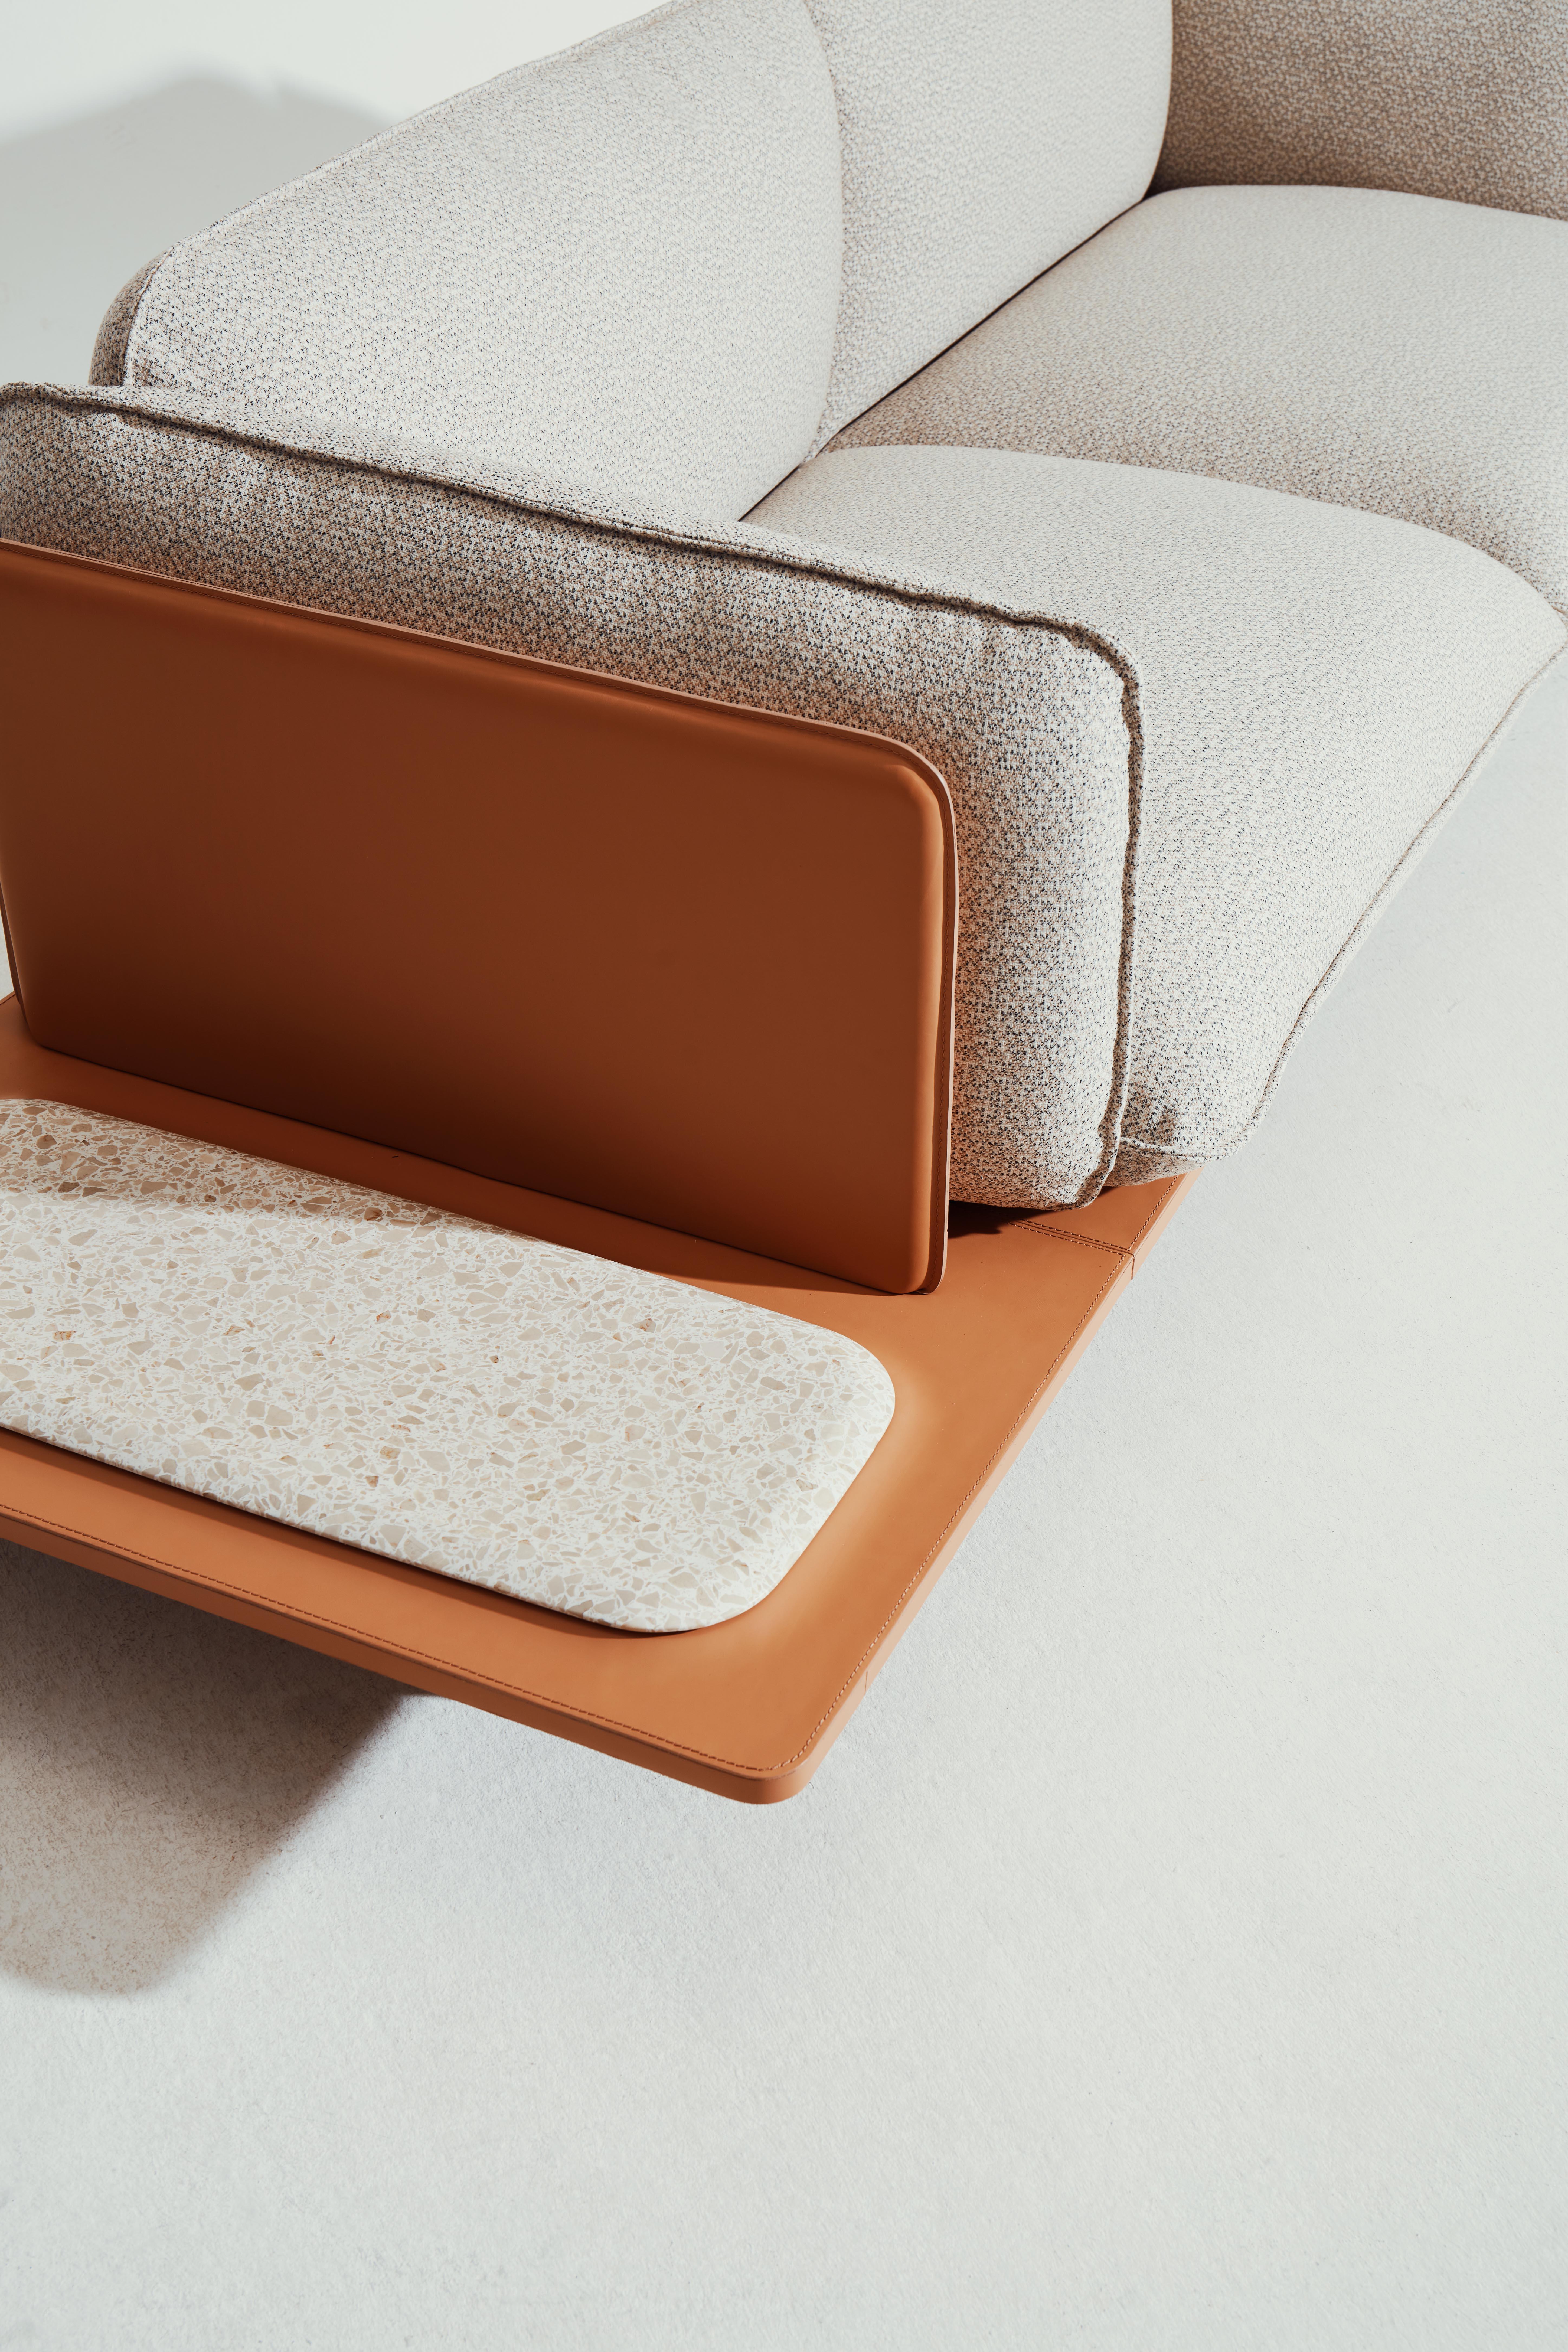 Organic Modern Sahara Sofa by Noé Duchaufour Lawrance For Sale